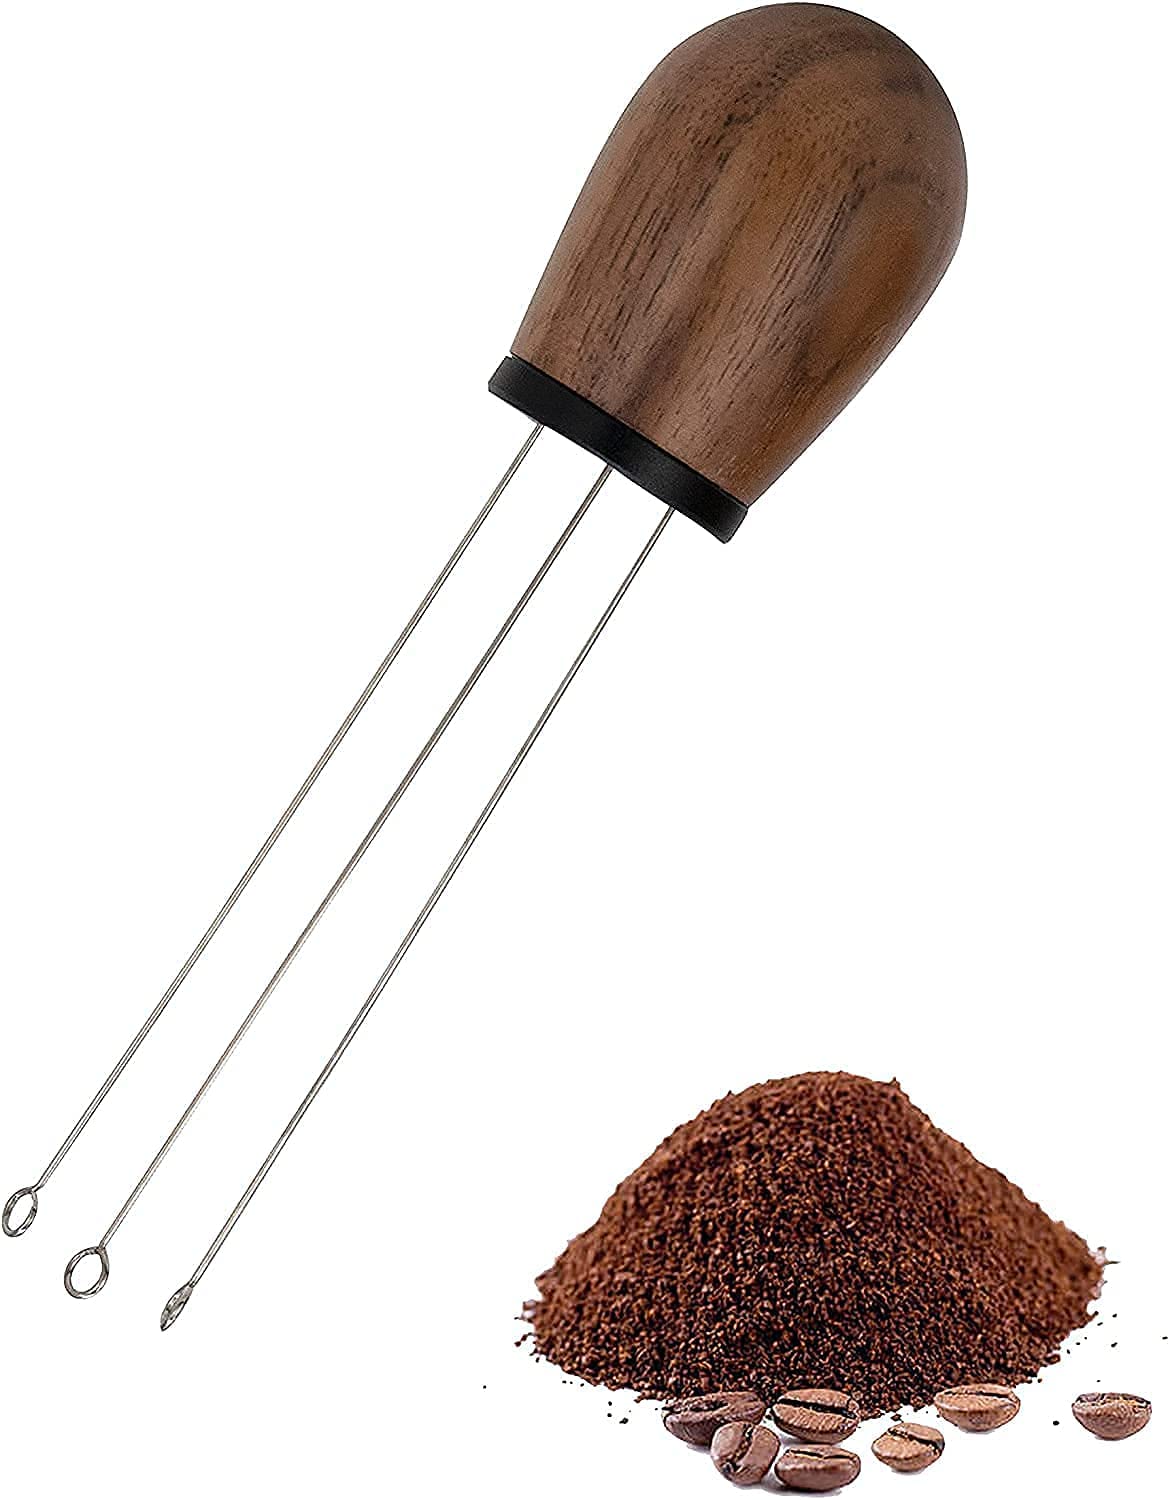 Coffee Espresso Needle Tool Stirrer Whisk Matcha Tamper Stirring